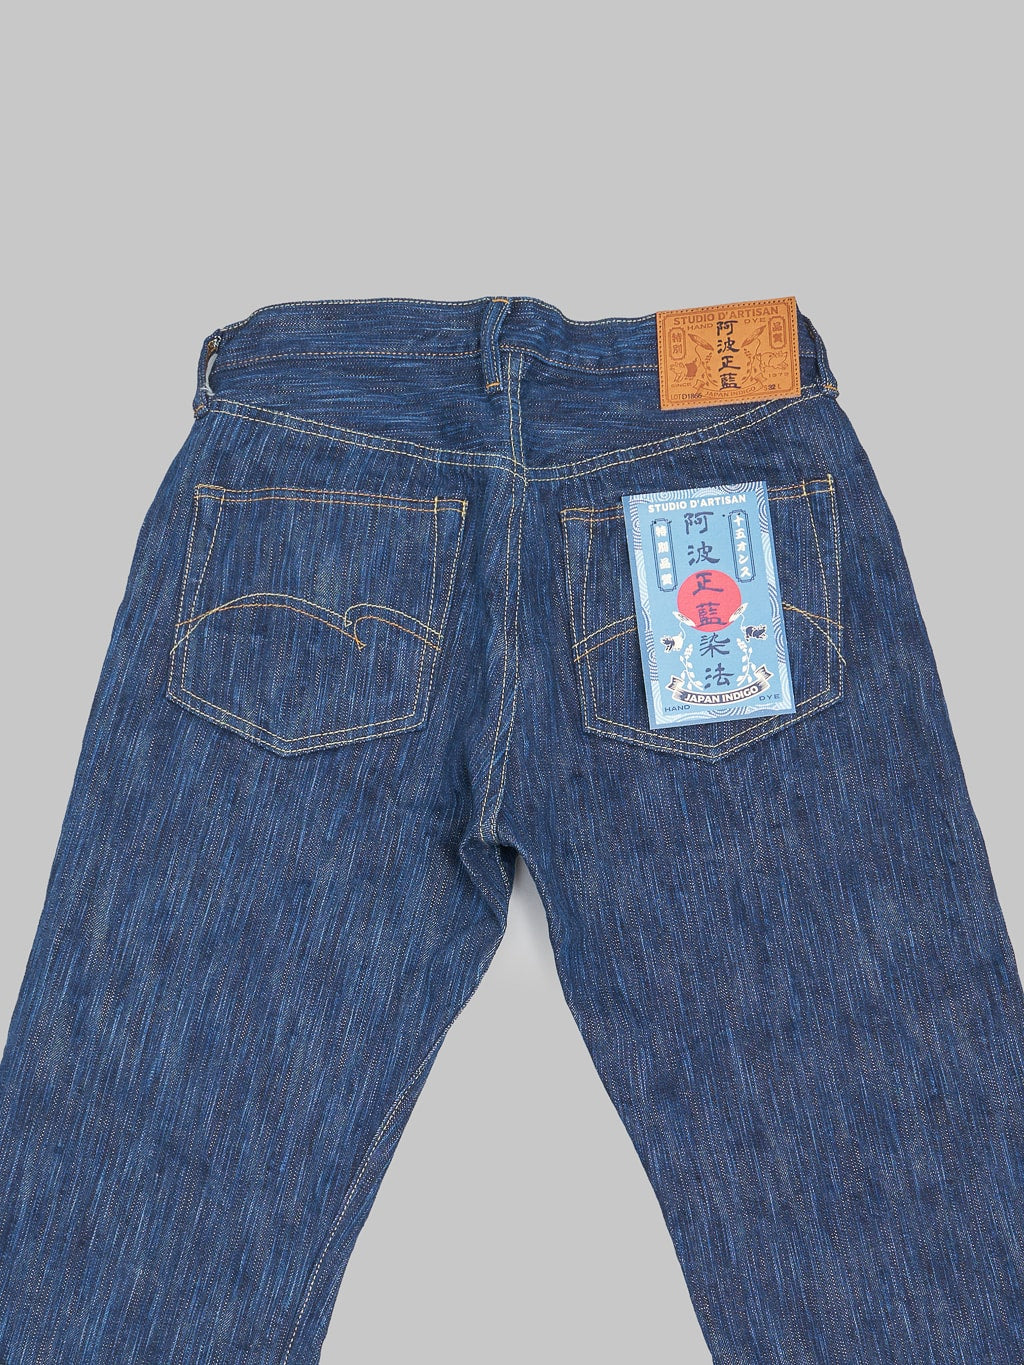 Studio dartisan tokushima awa shoai regular straight jeans back view